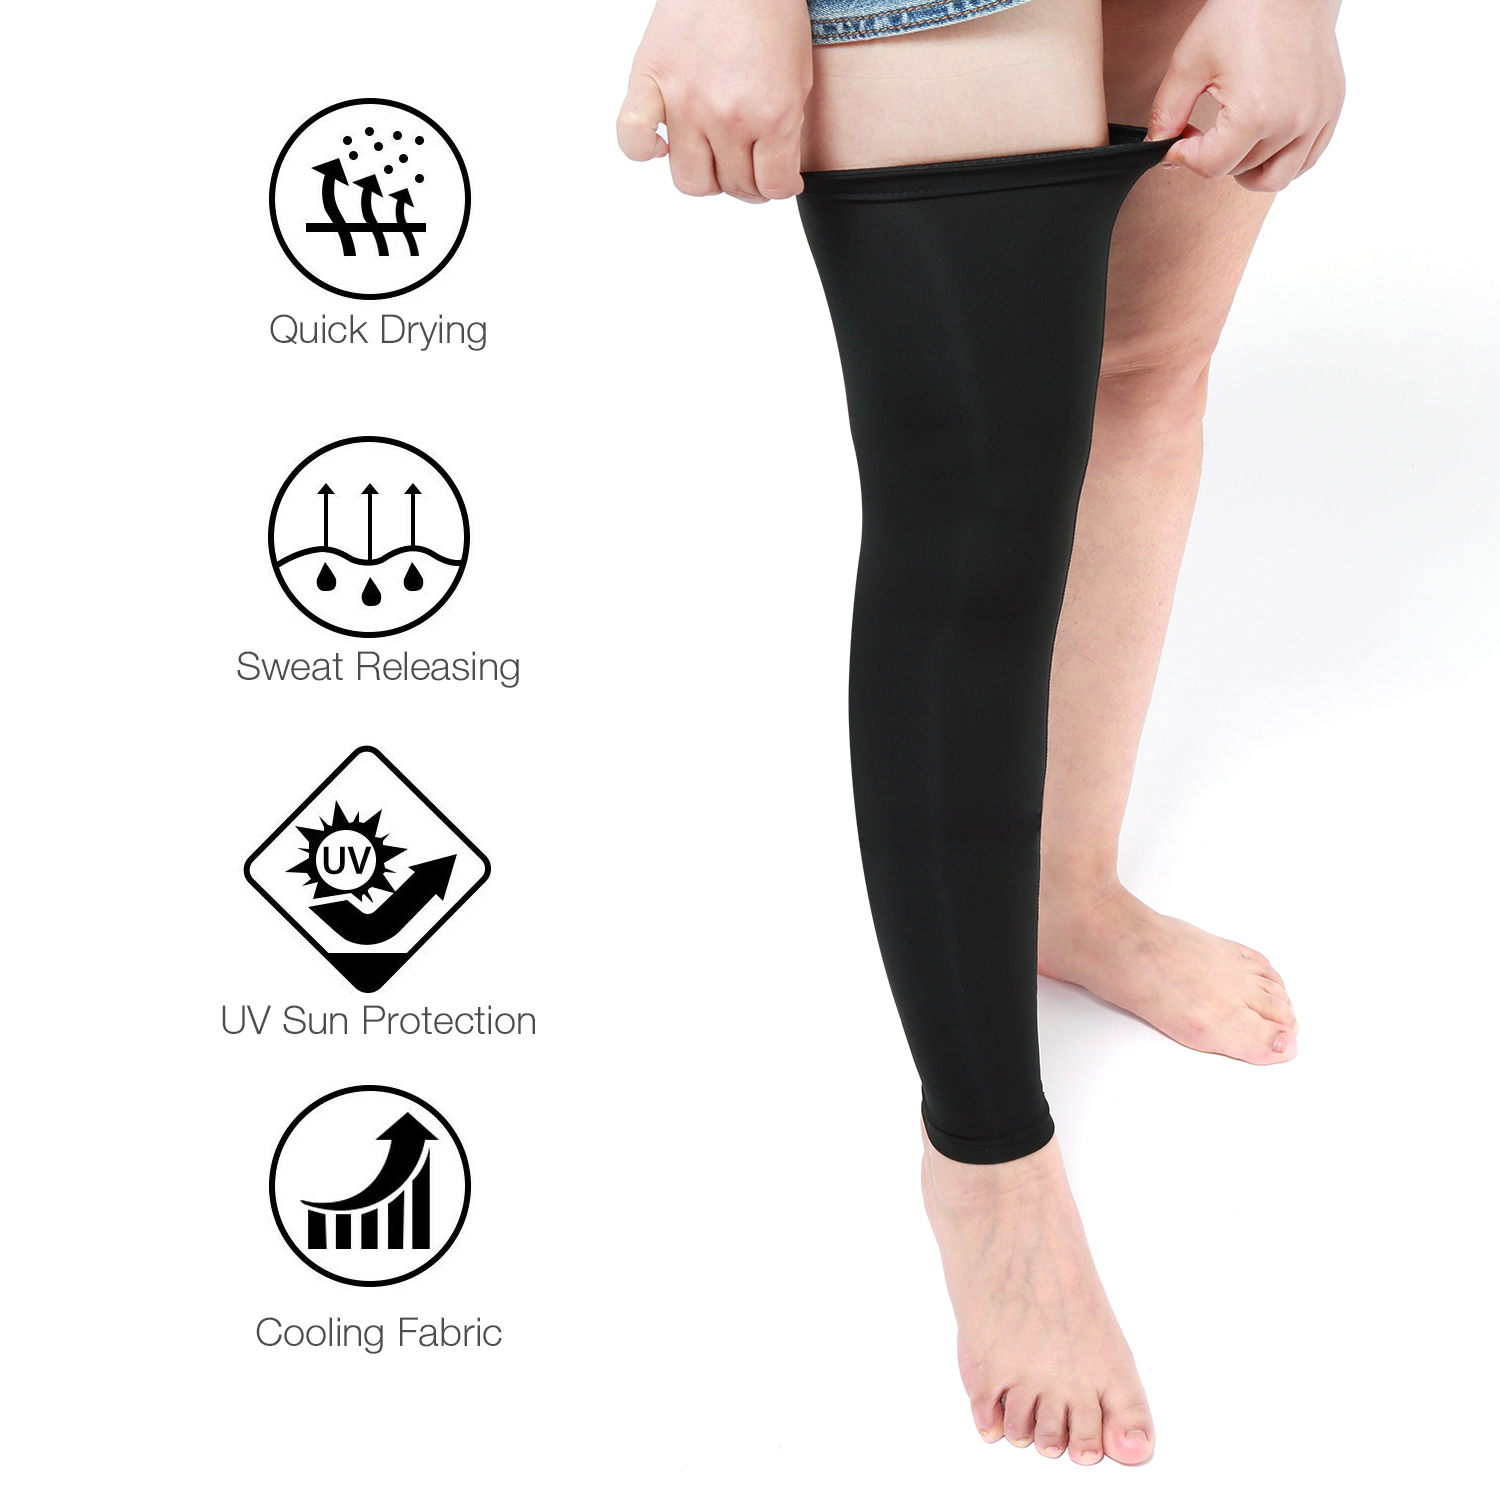 Compression Long Sleeve Support Leg Knee Brace Socks Sport Pain Relief Men Women 